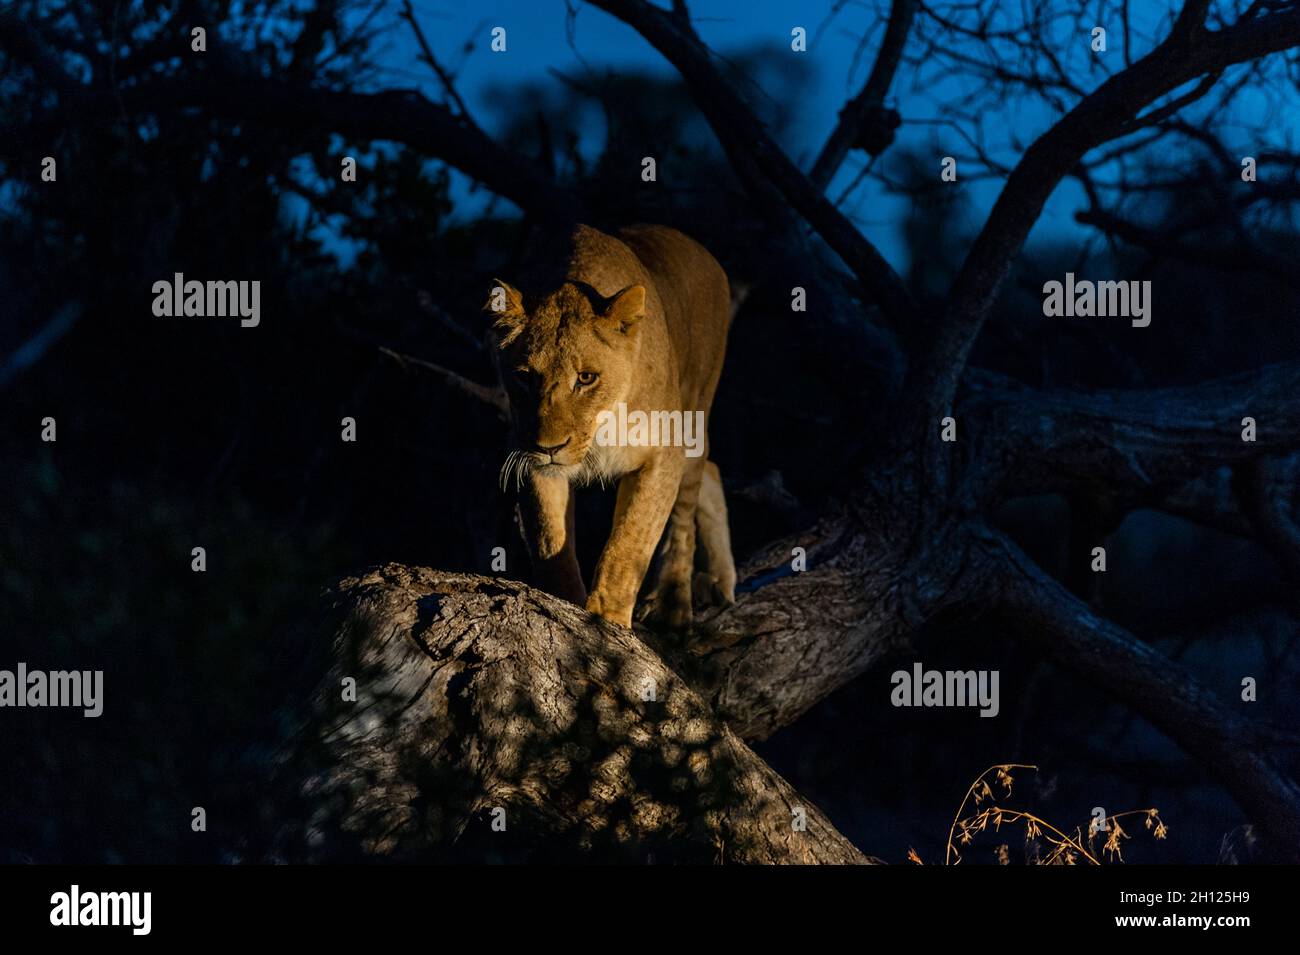 A lioness, Panthera leo, walking along a fallen tree trunk at night. Mala Mala Game Reserve, South Africa. Stock Photo